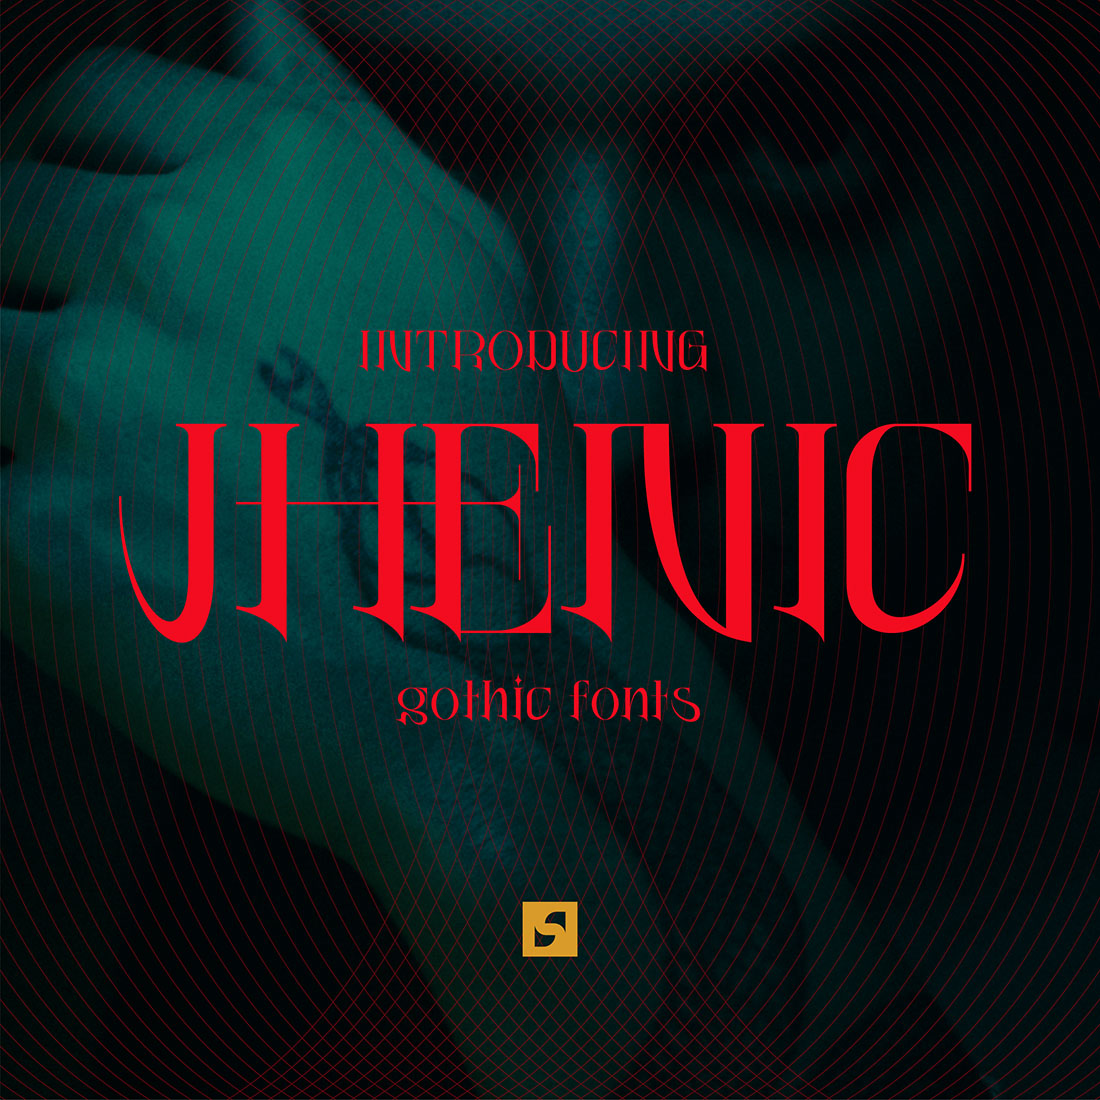 JHENIC - Gothic Serif Font cover image.